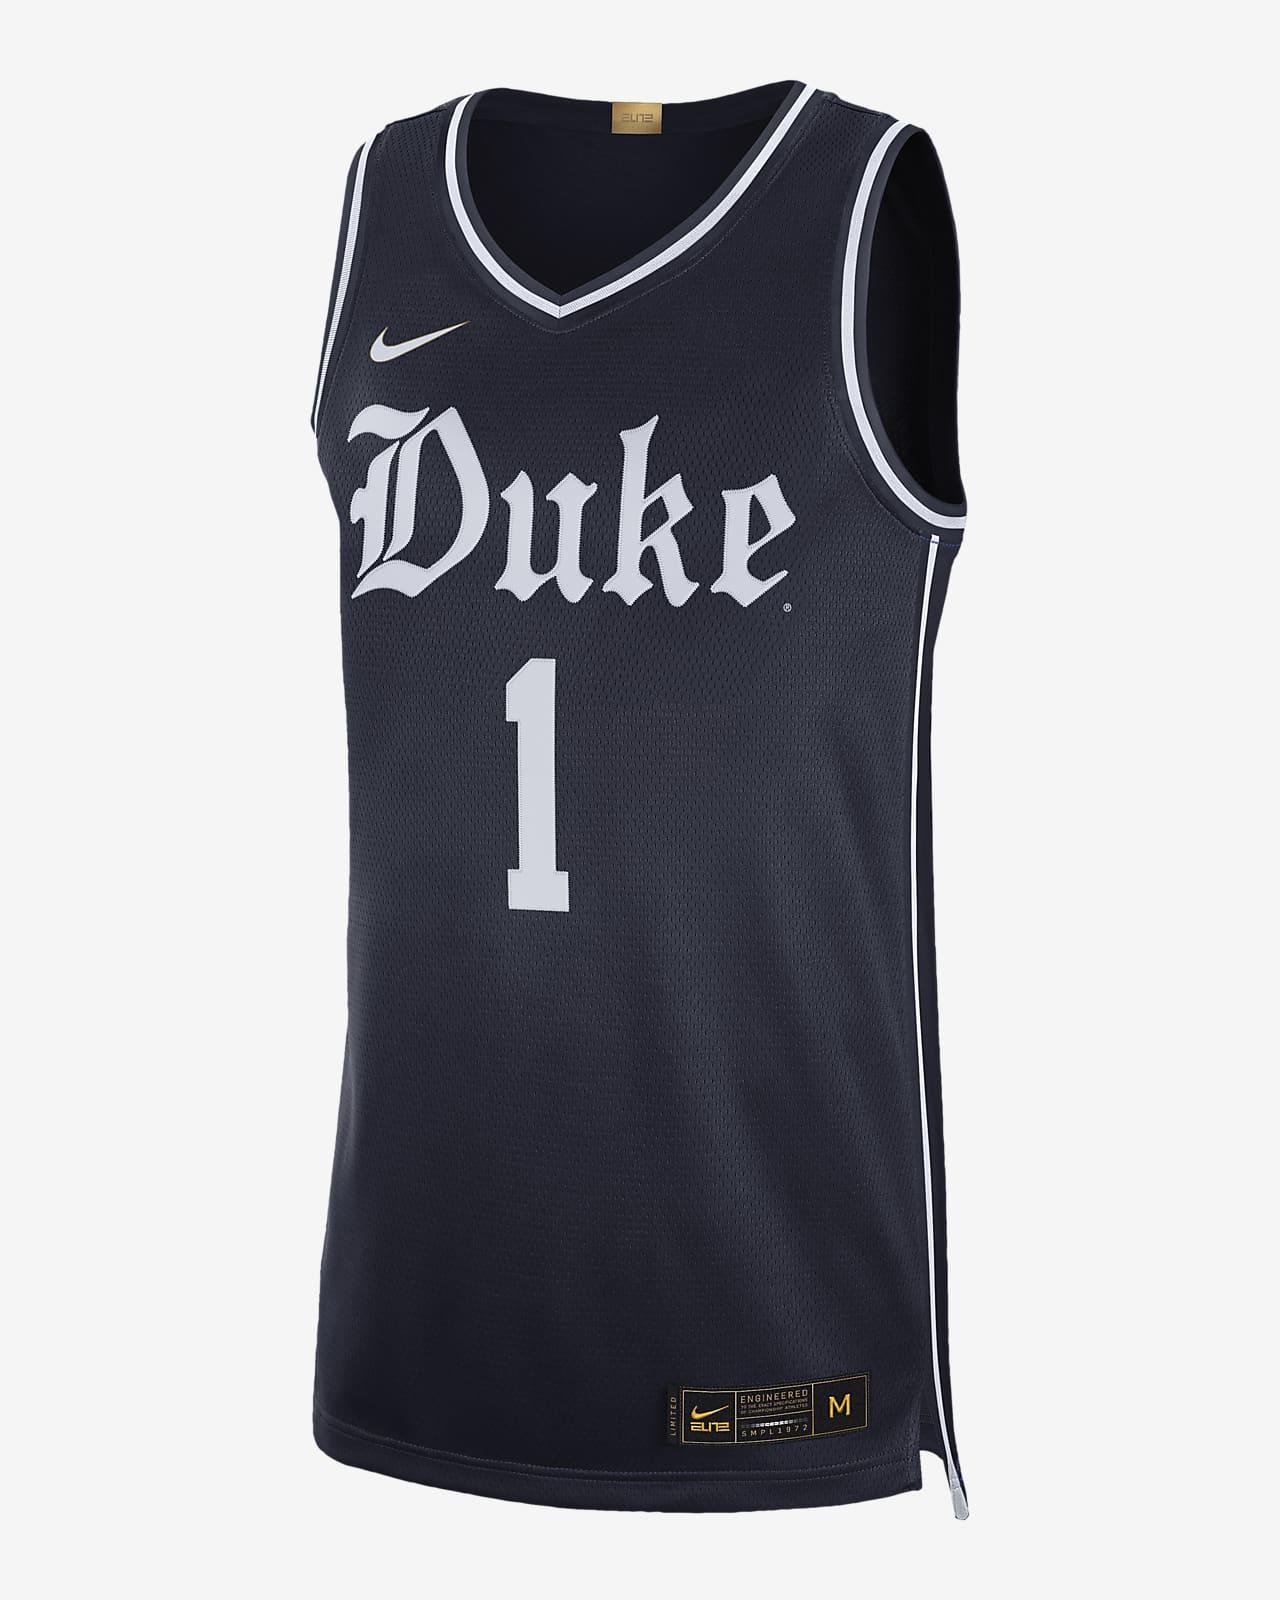 Jersey de básquetbol Dri-FIT College para hombre Duke Limited. Nike.com